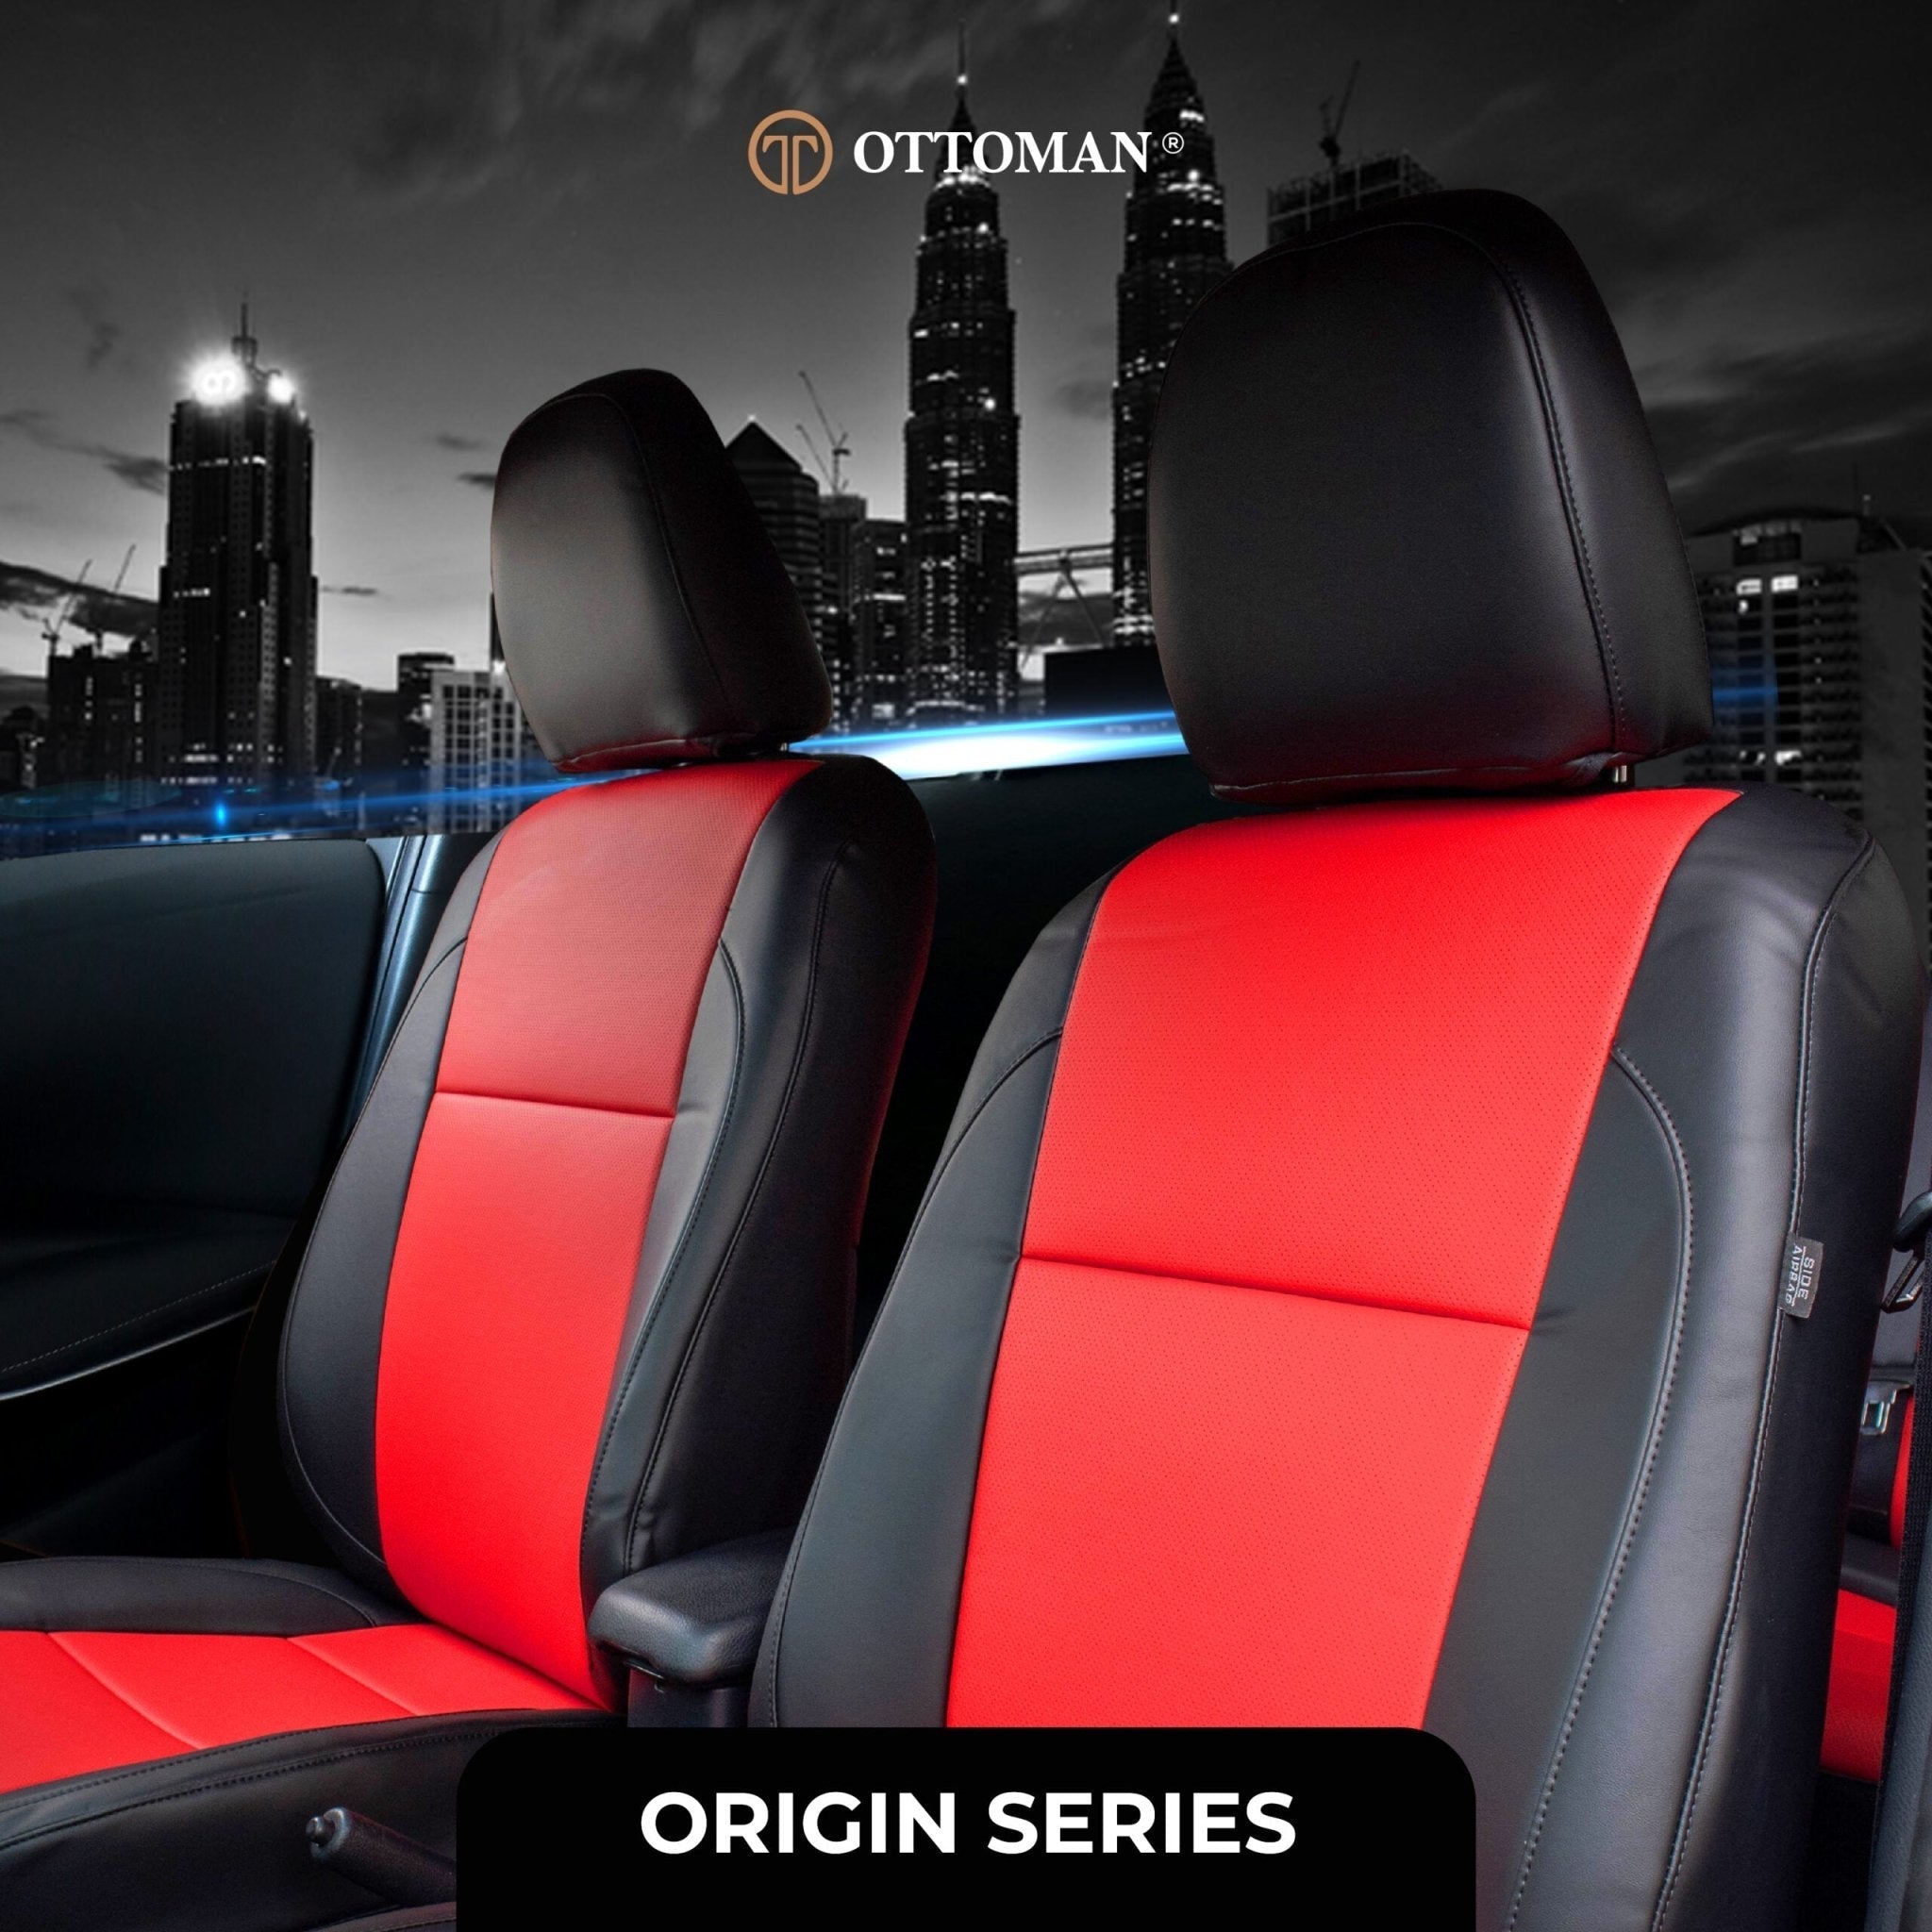 Nissan Teana L33 (2014-Present) Ottoman Seat Cover Seat Cover in Klang Selangor, Penang, Johor Bahru - Ottoman Car Mats